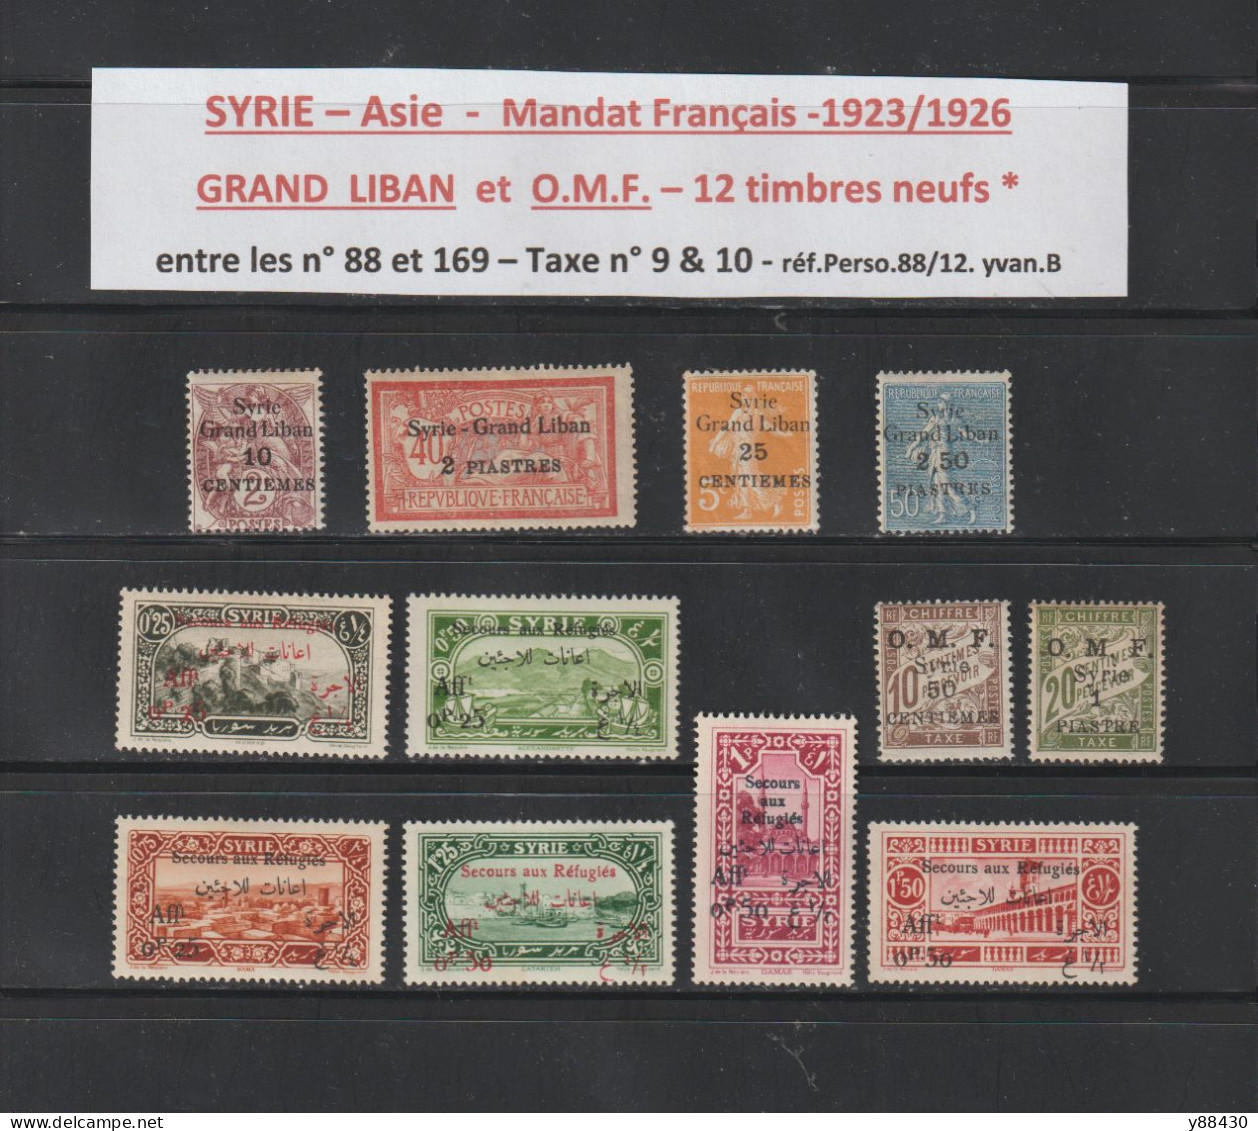 GRAND LIBAN Et O.M.F.- Mandat Français - 12 Timbres Dont 2 Taxe - Neuf * De 1923/1926 - 2 Scan - Nuevos